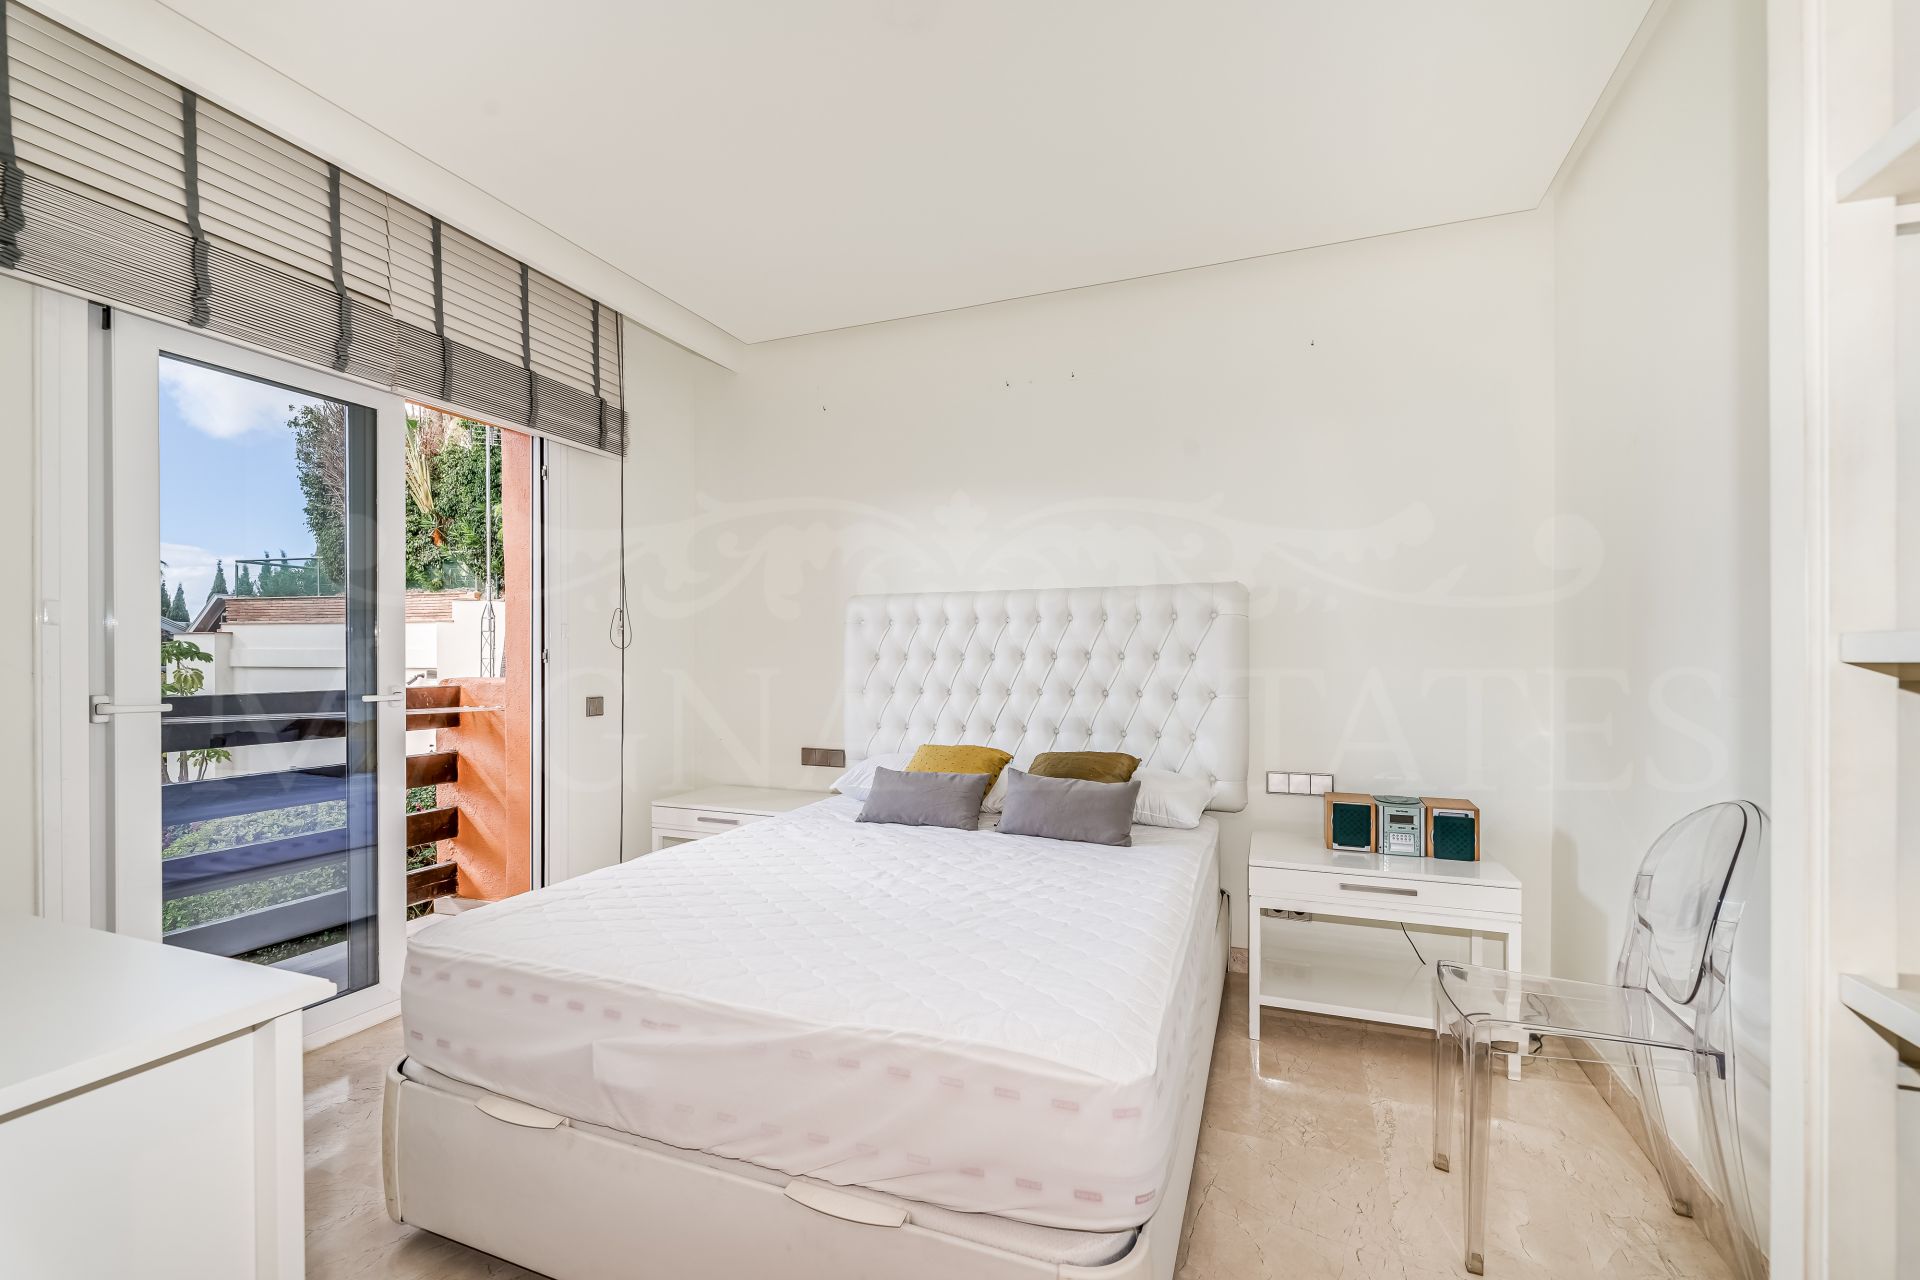 6 bedroom double apartment in the heart of Sierra Blanca, Marbella